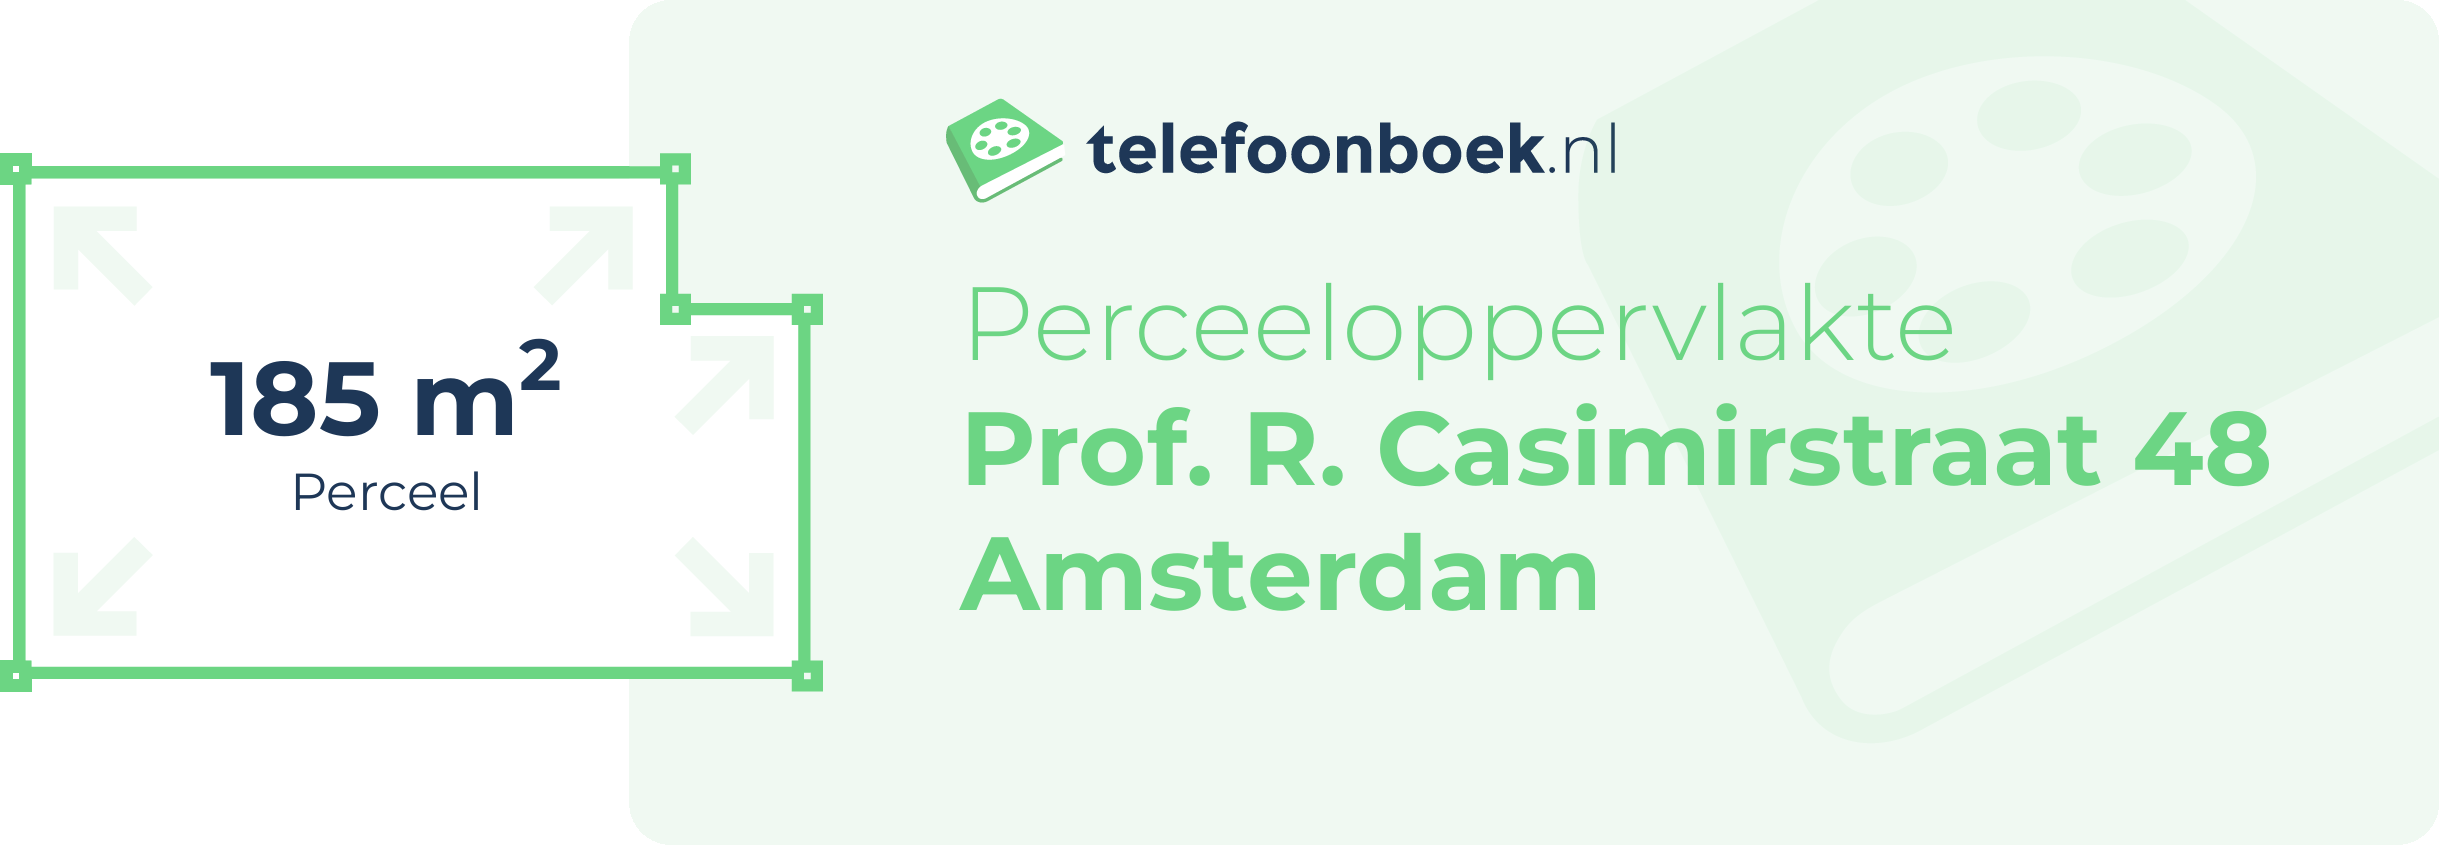 Perceeloppervlakte Prof. R. Casimirstraat 48 Amsterdam